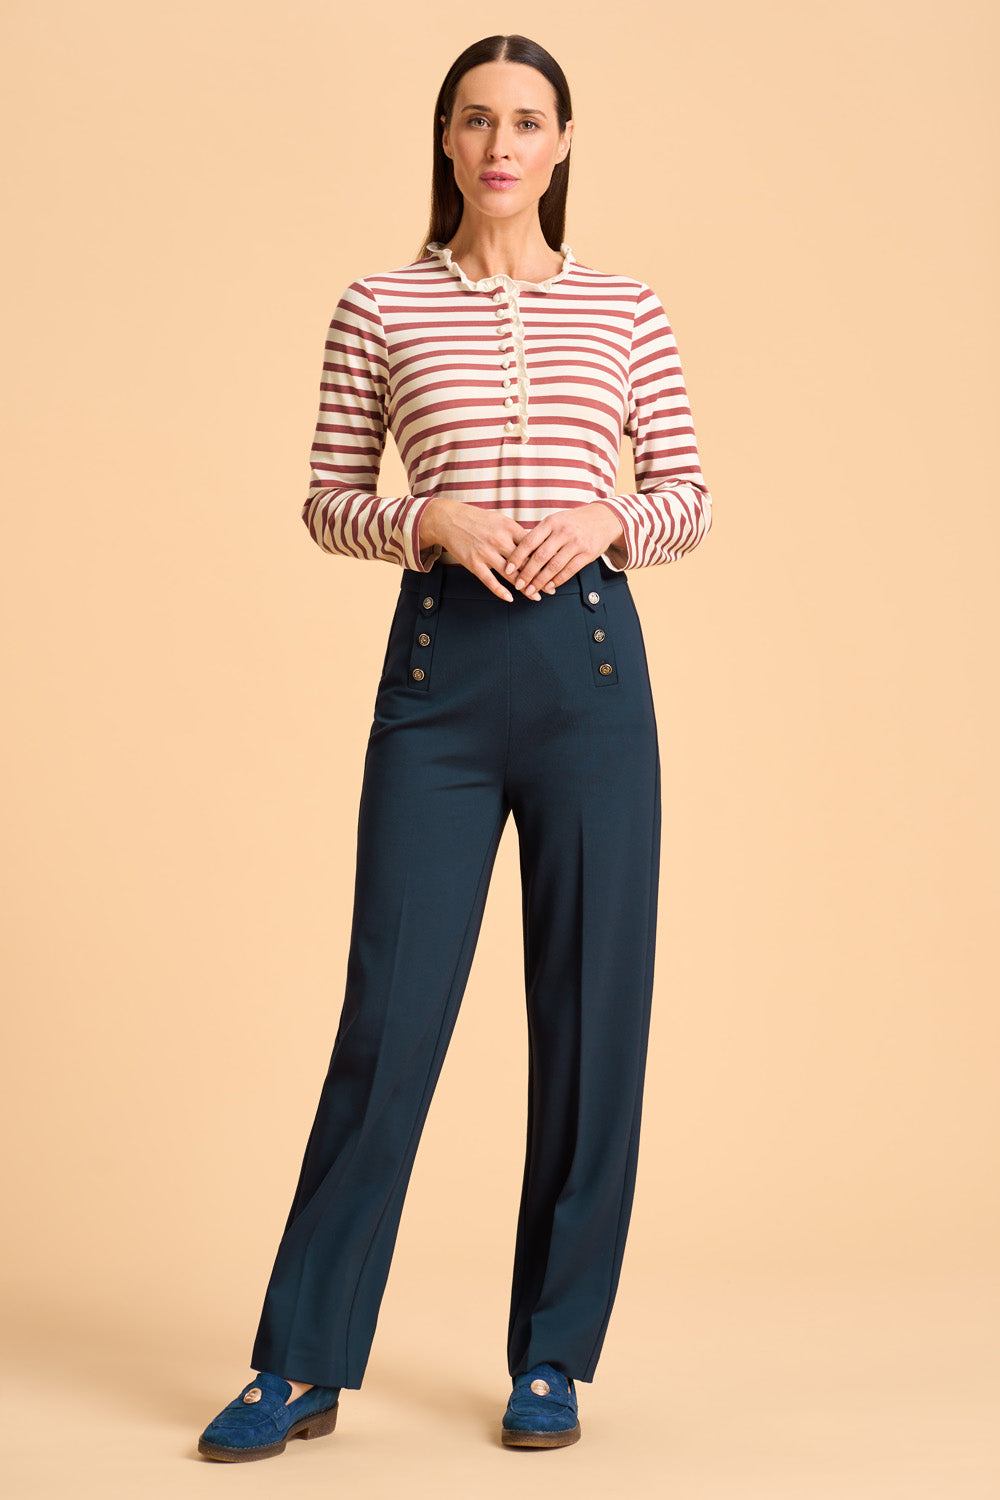 9 Comfy & flatteringly stylish Pants for Women - Theunstitchd Women's  Fashion Blog